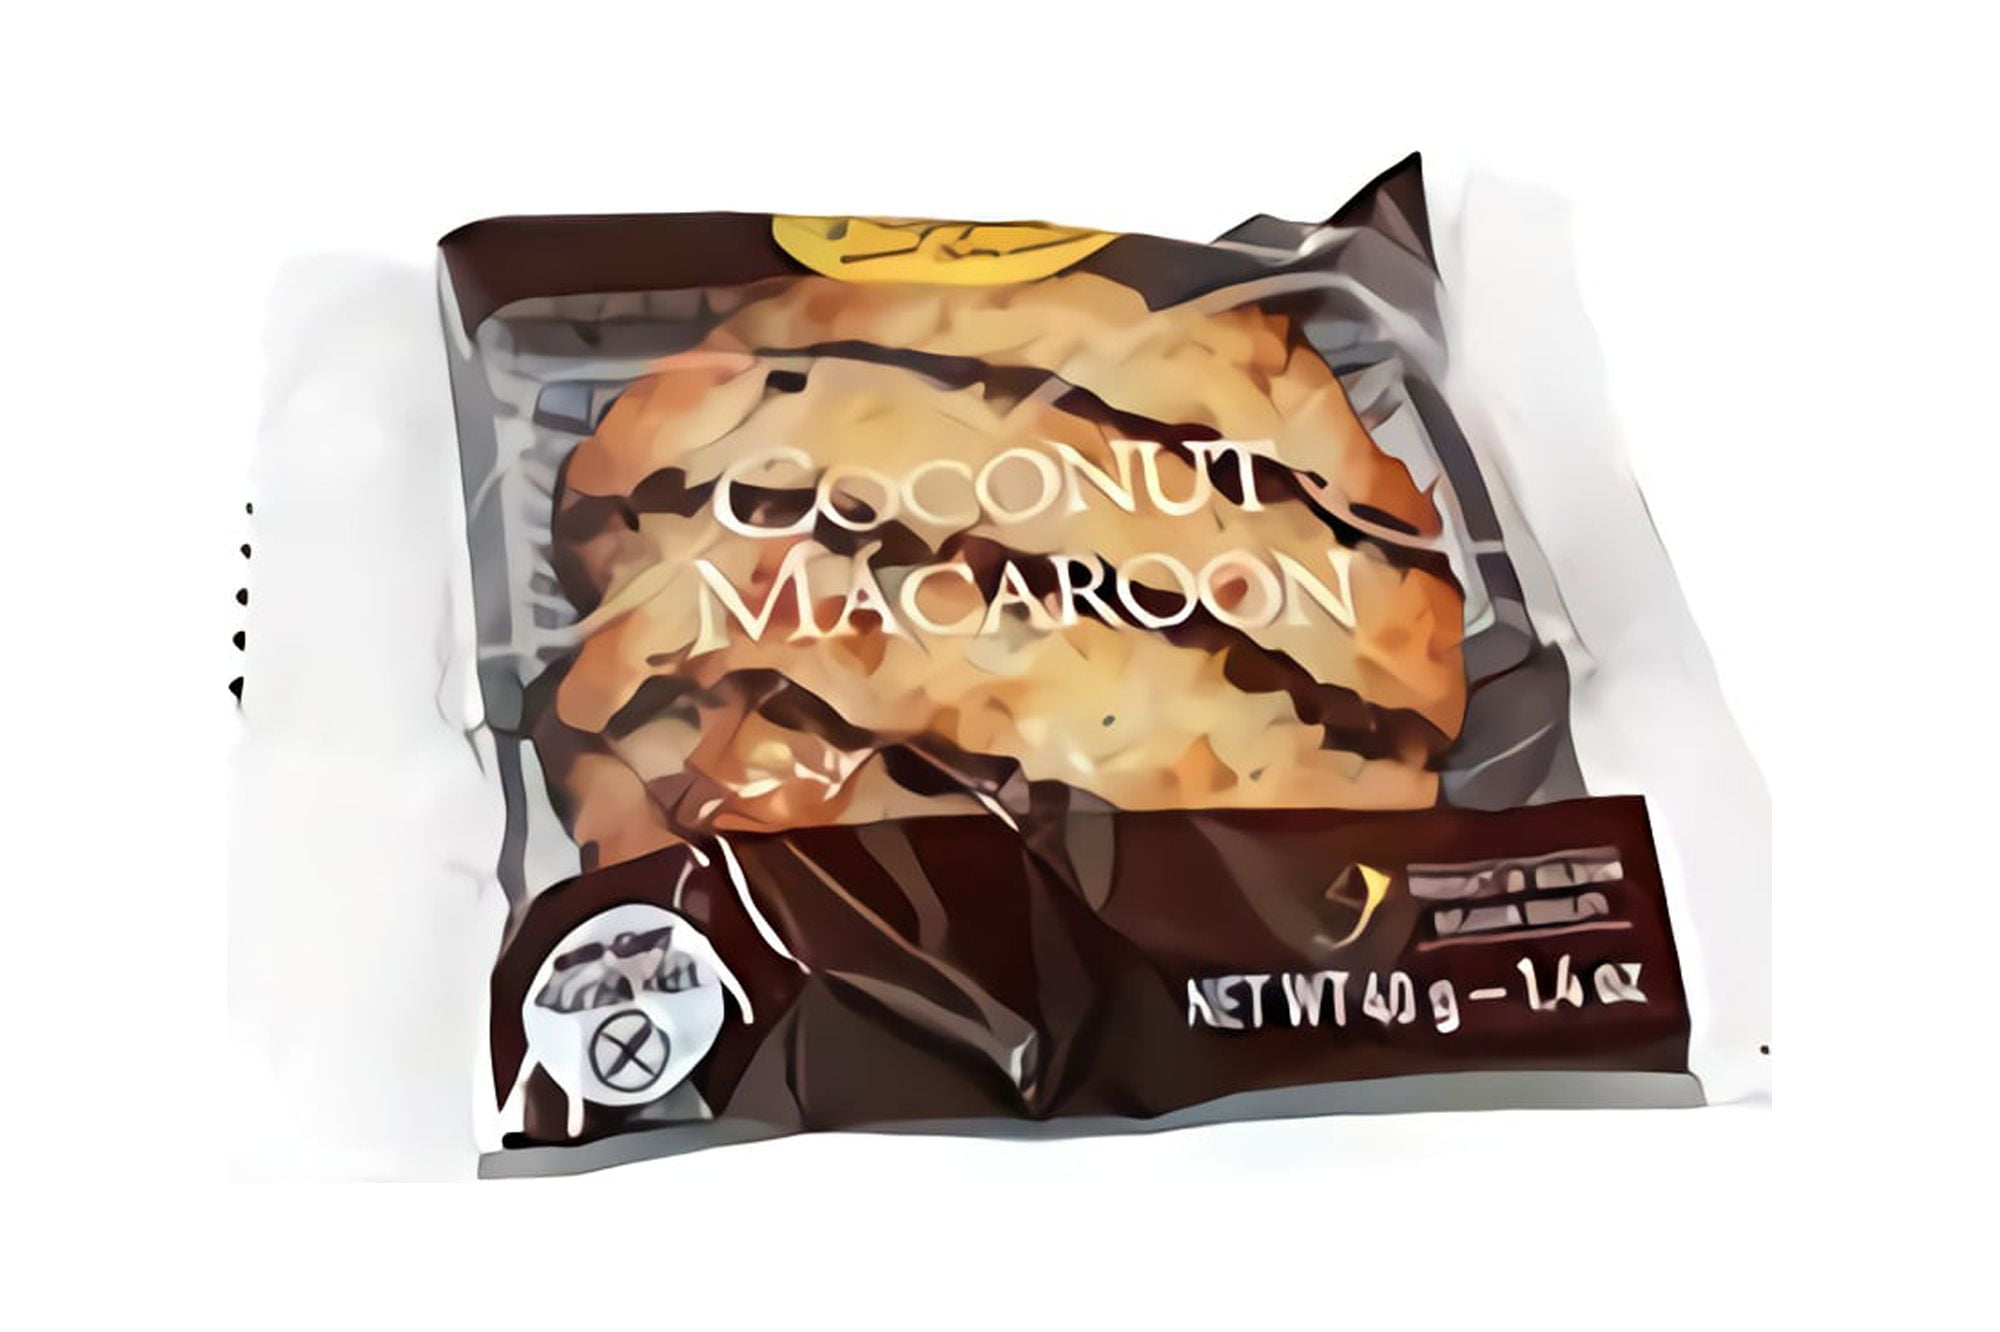 Les Bonbons de Mandy - Chocolat & Caramel - Knoppers Coconut